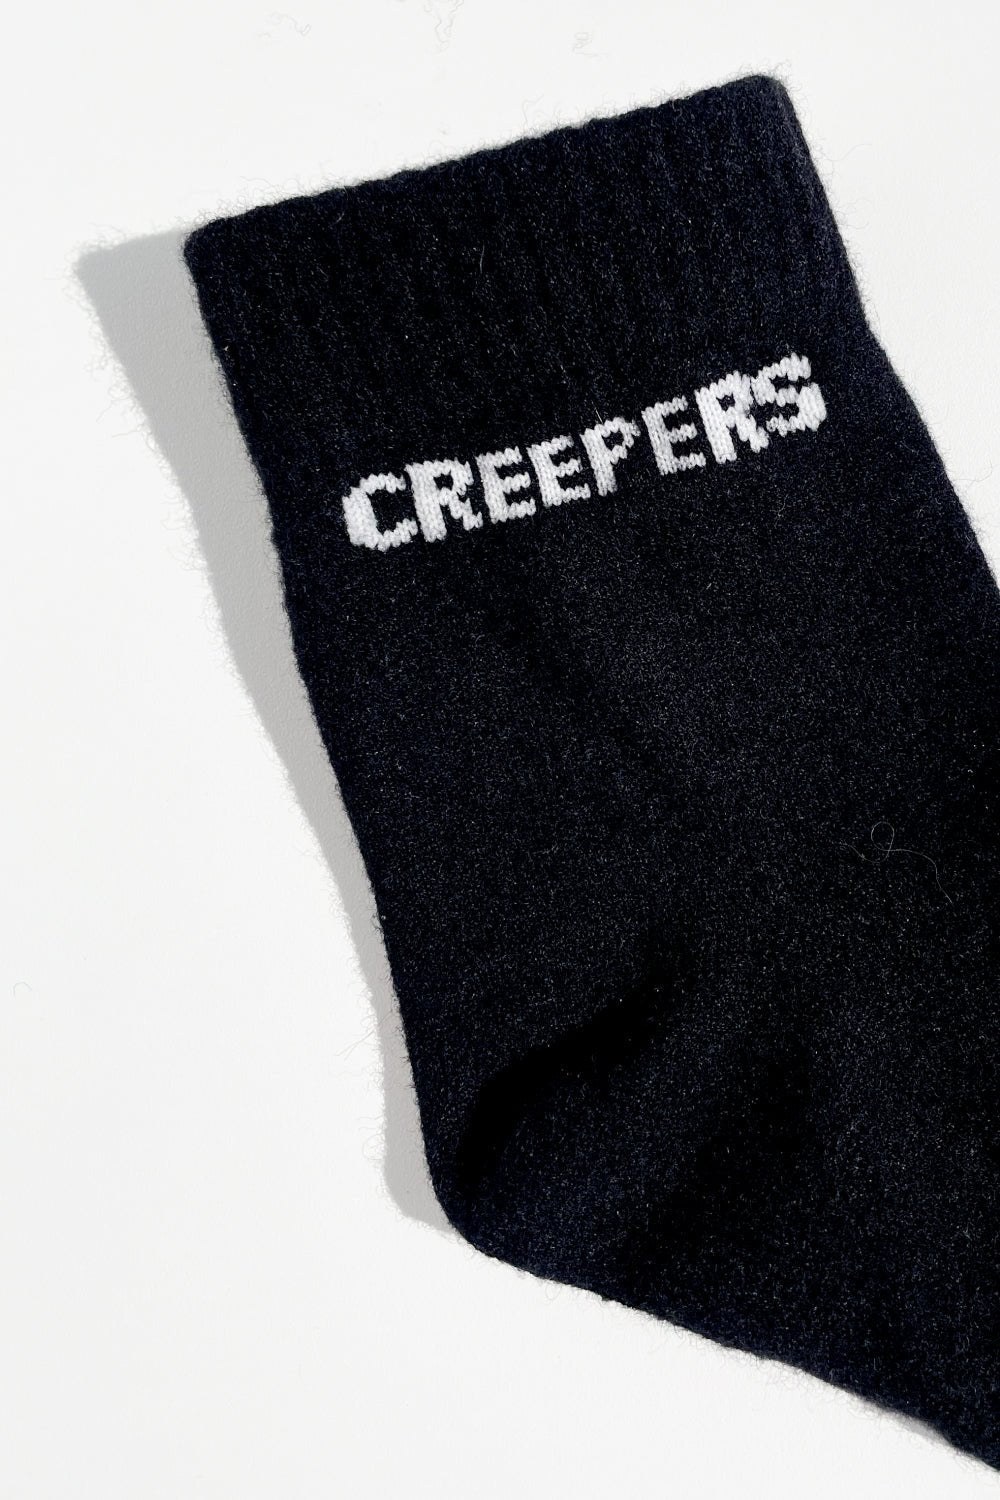 Creepers Merino Toe Socks - Quarter Crew Length Lightweight Runner | Coffee Outdoors